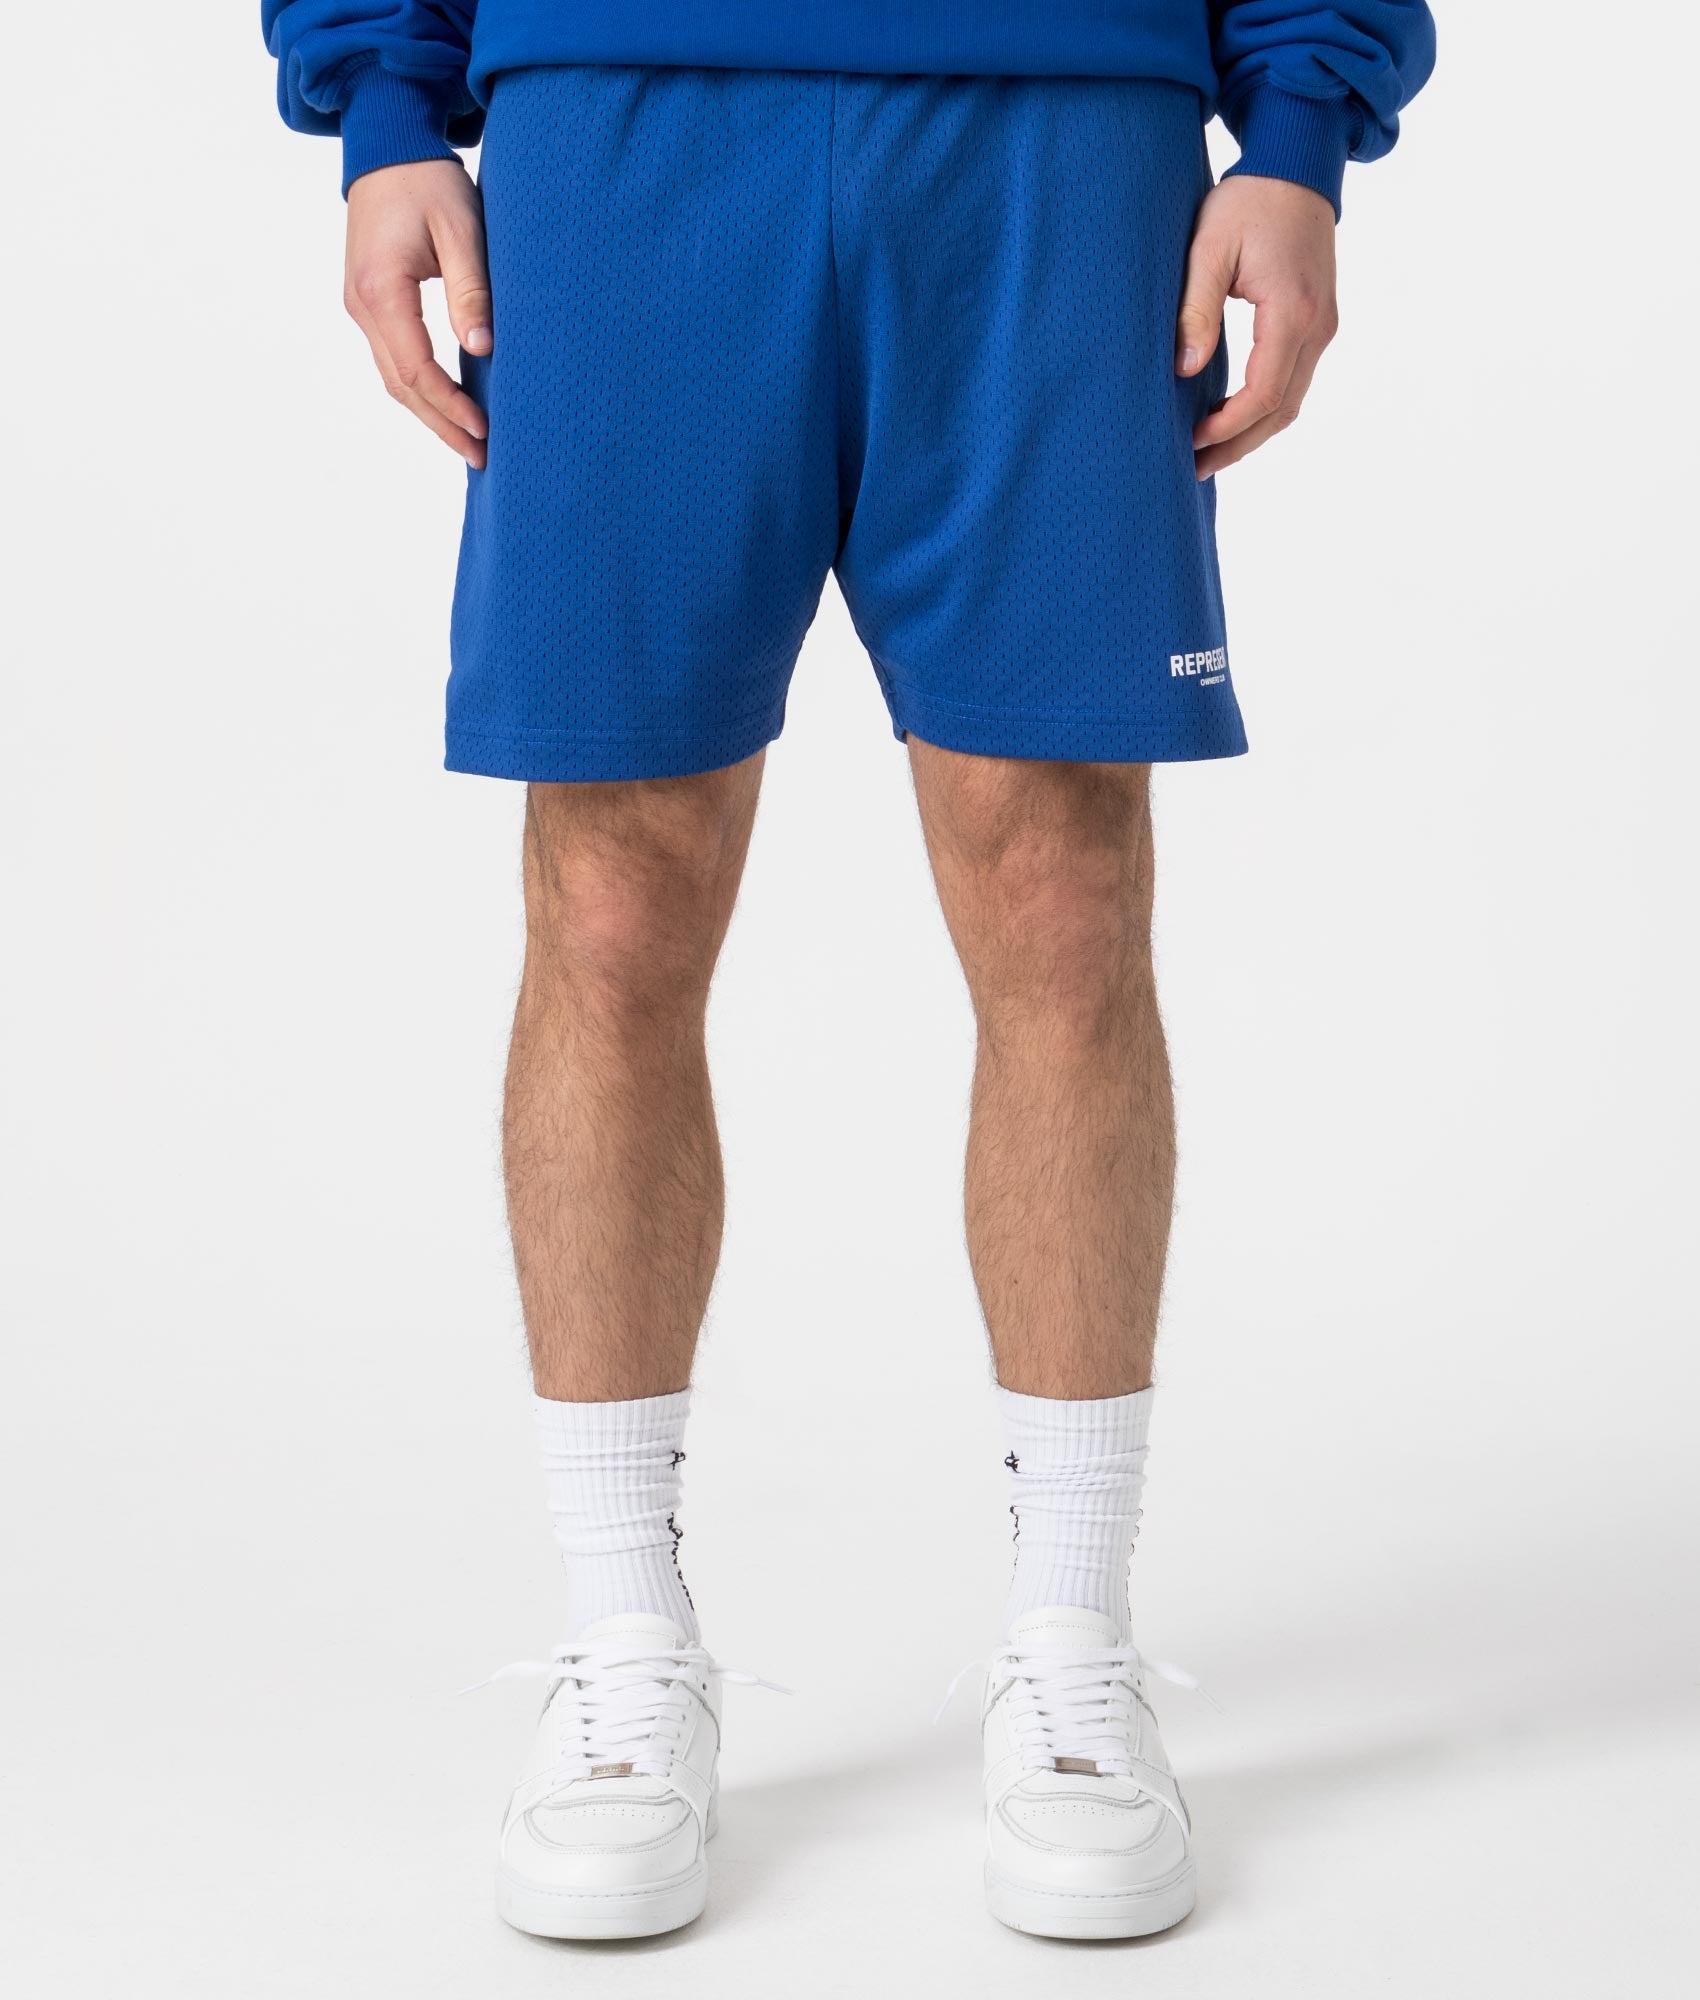 Represent Mens Represent Owners Club Mesh Shorts - Colour: 109 Cobalt Blue - Size: Large